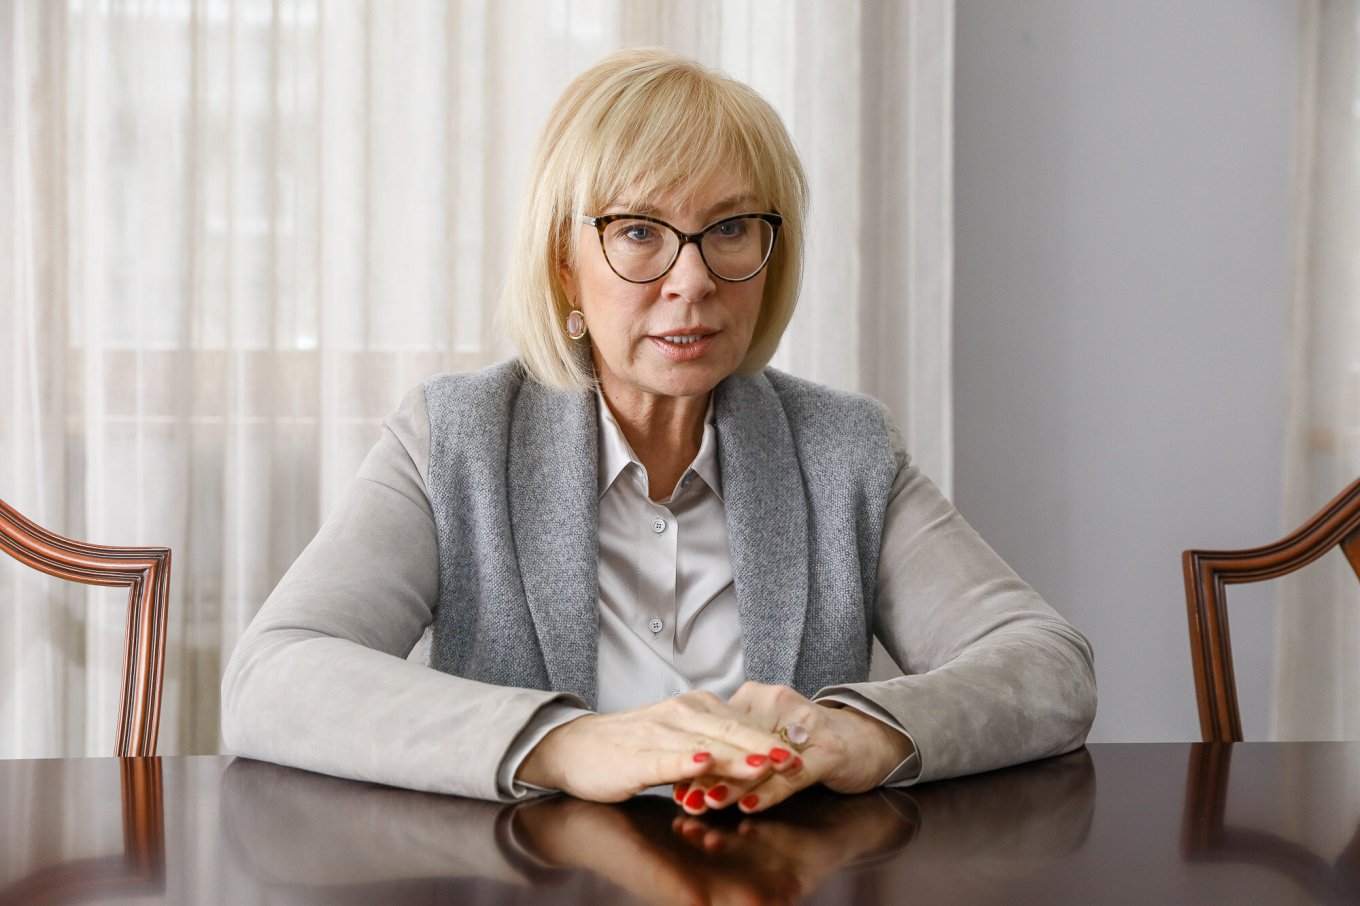 Verkhovna Rada Commissioner for Human Rights Ludmyla Denisova